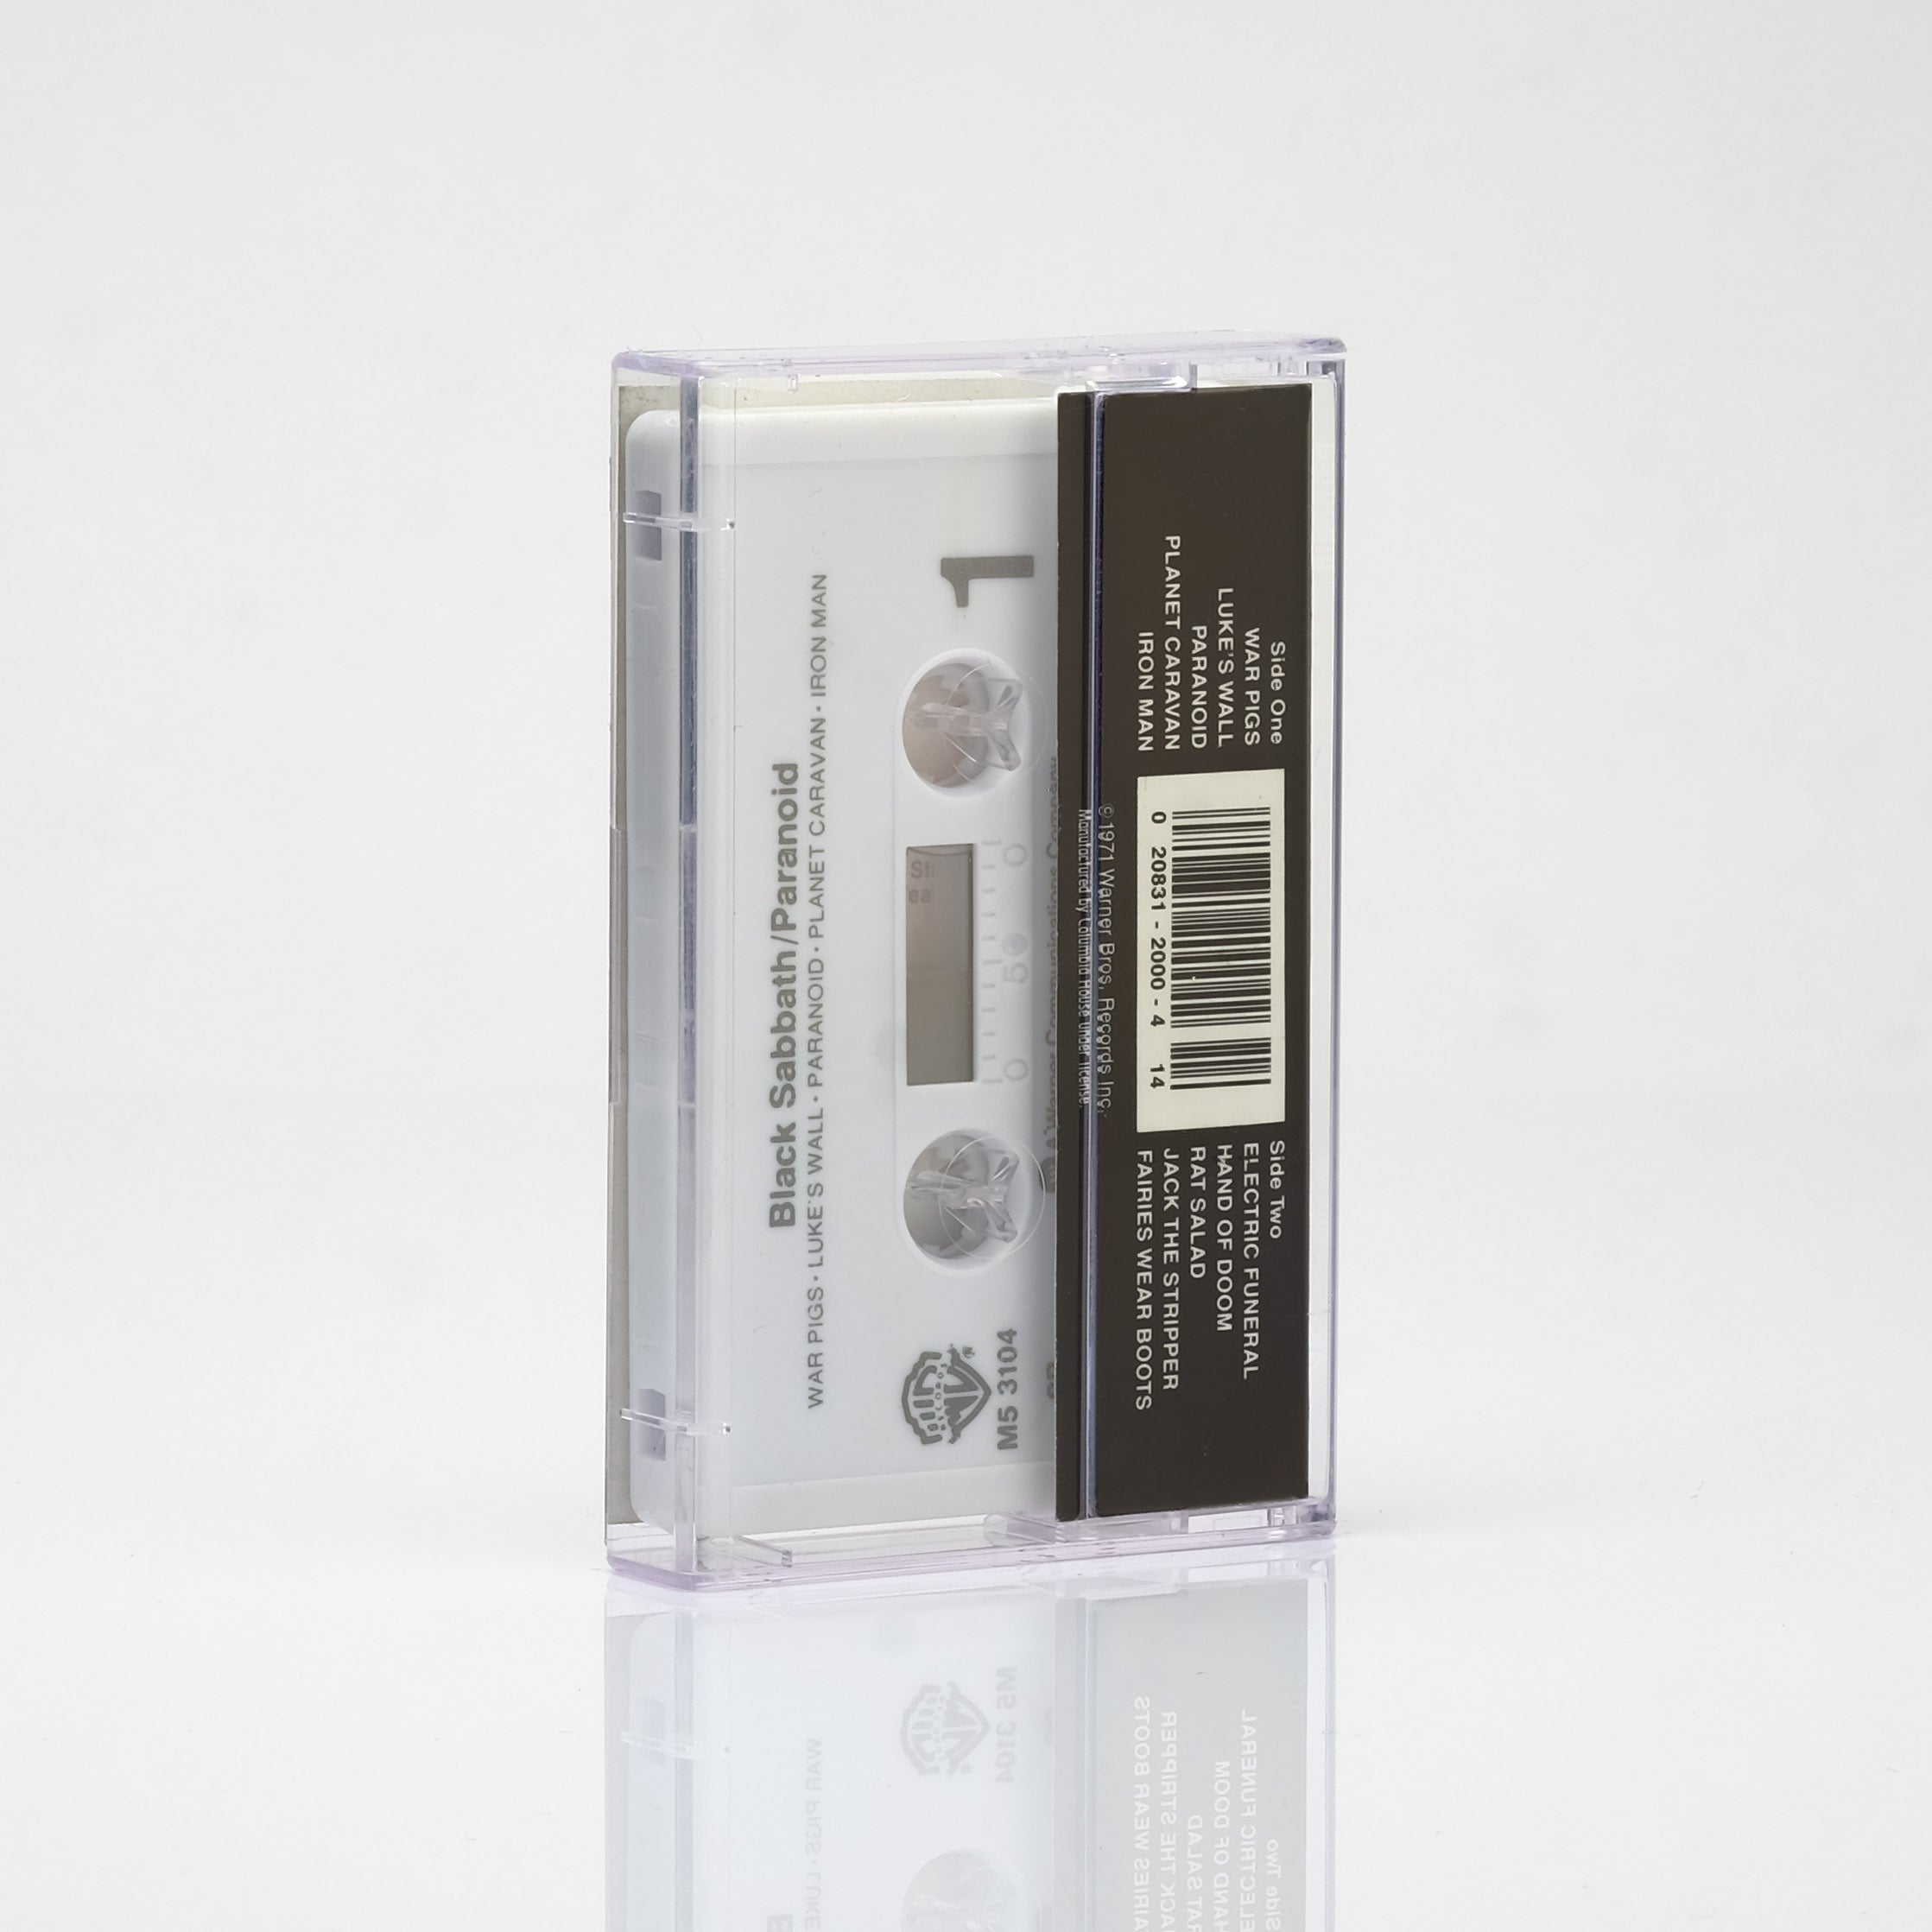 Black Sabbath - Paranoid Cassette Tape